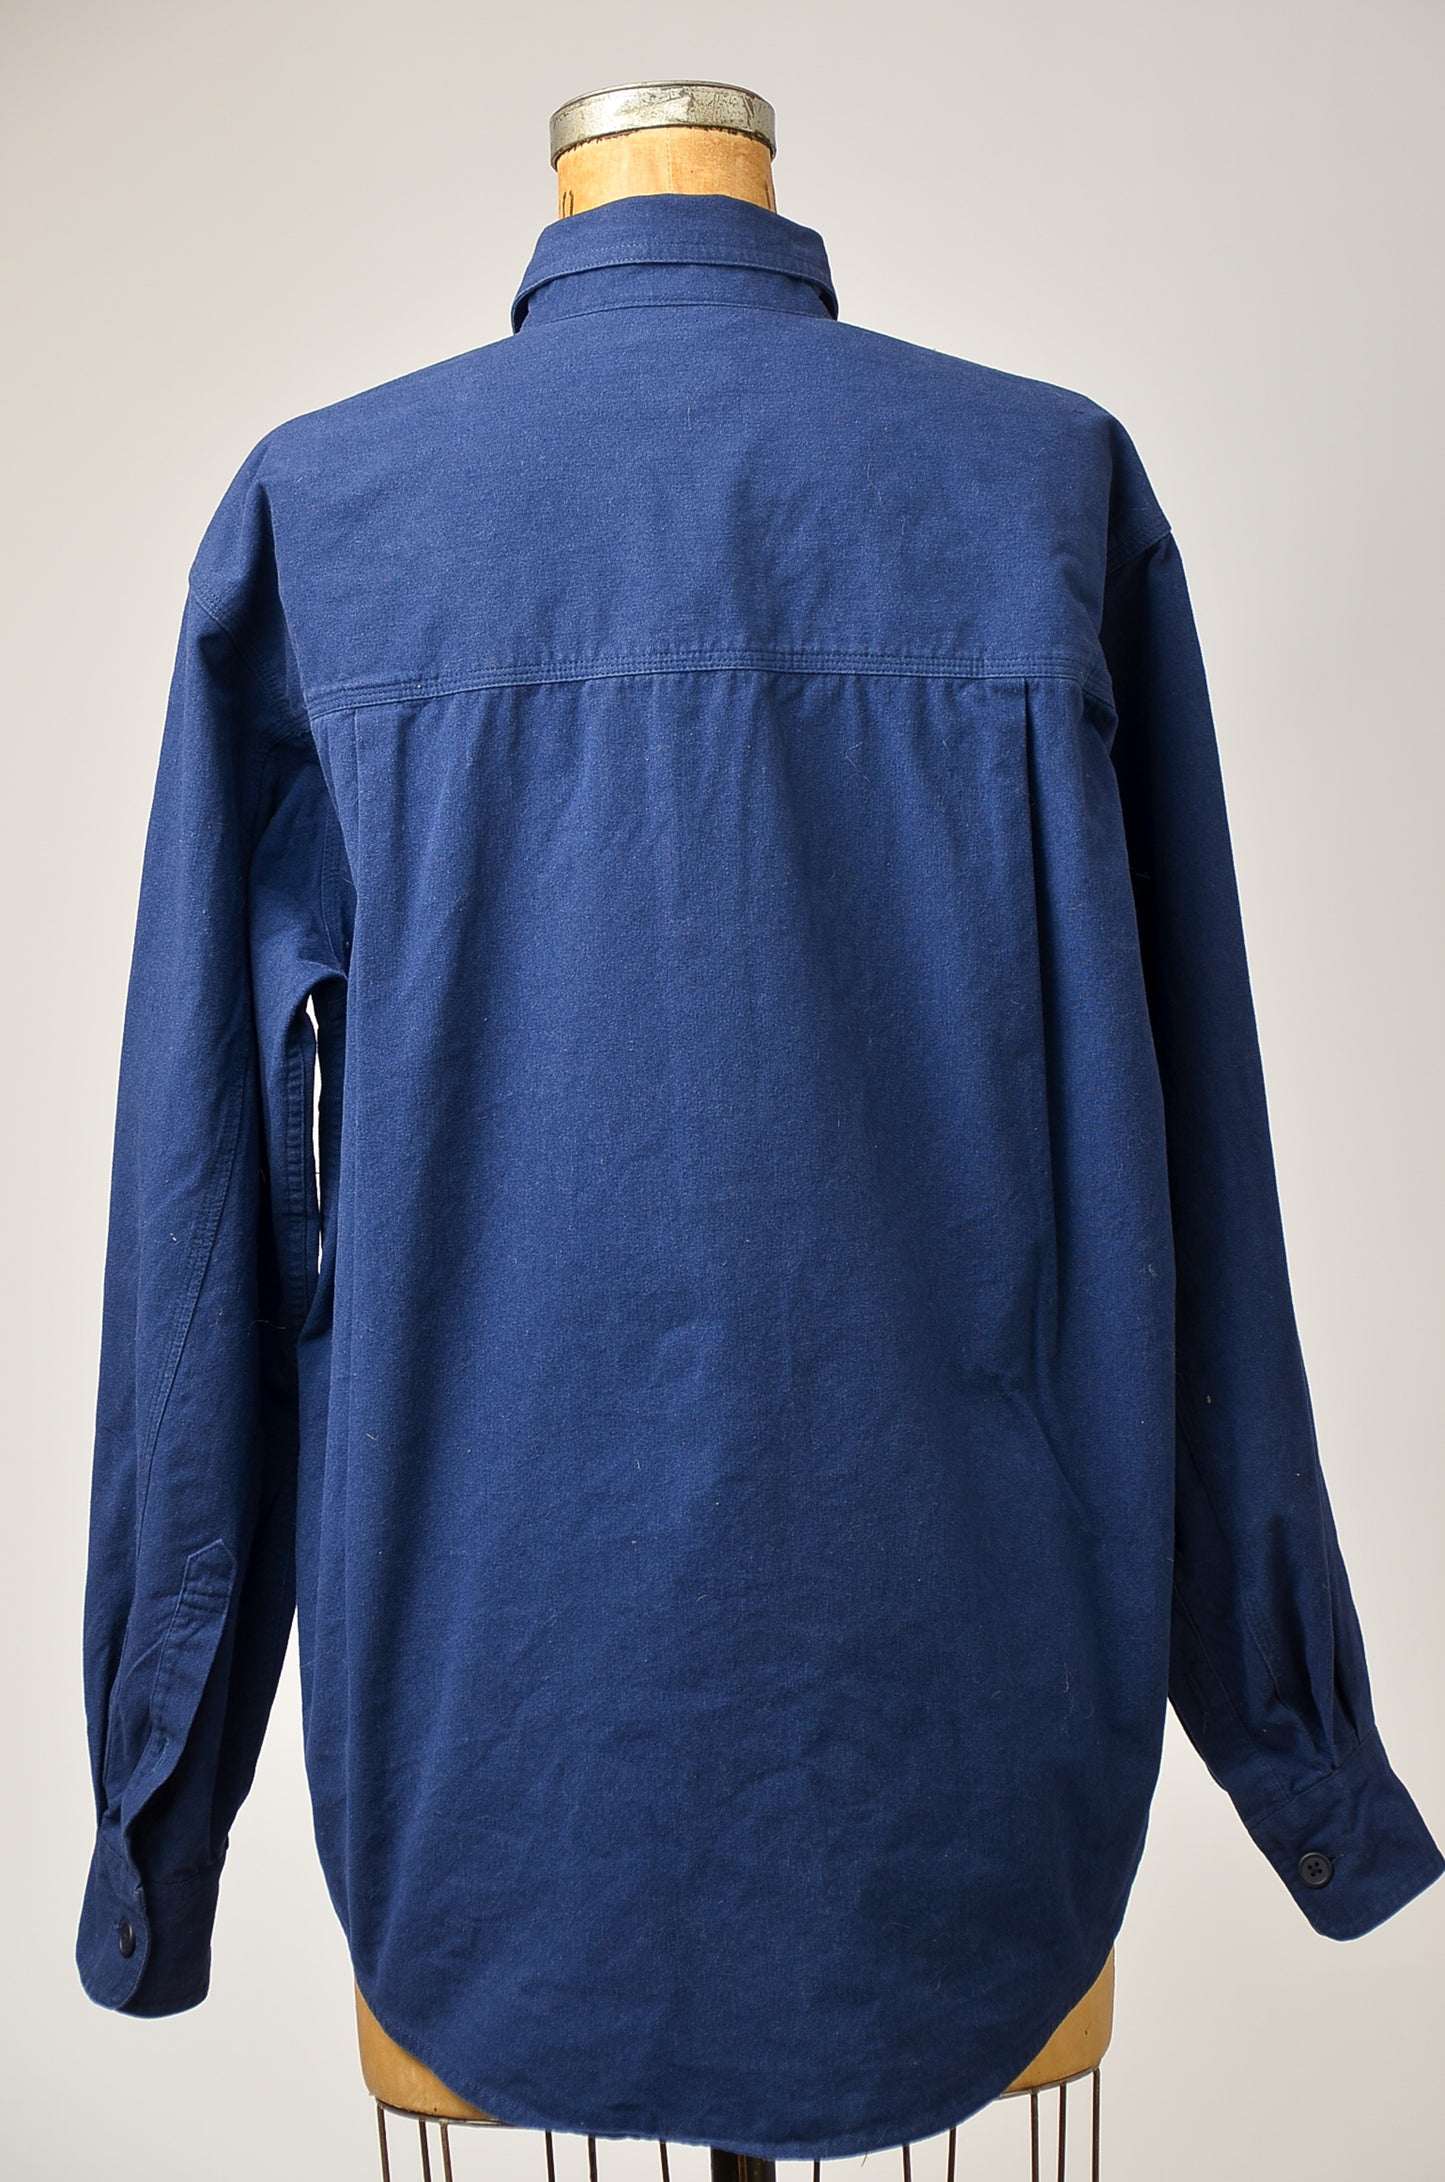 Vintage Patagonia Navy Blue Button Down Outdoorsman Shirt Jacket